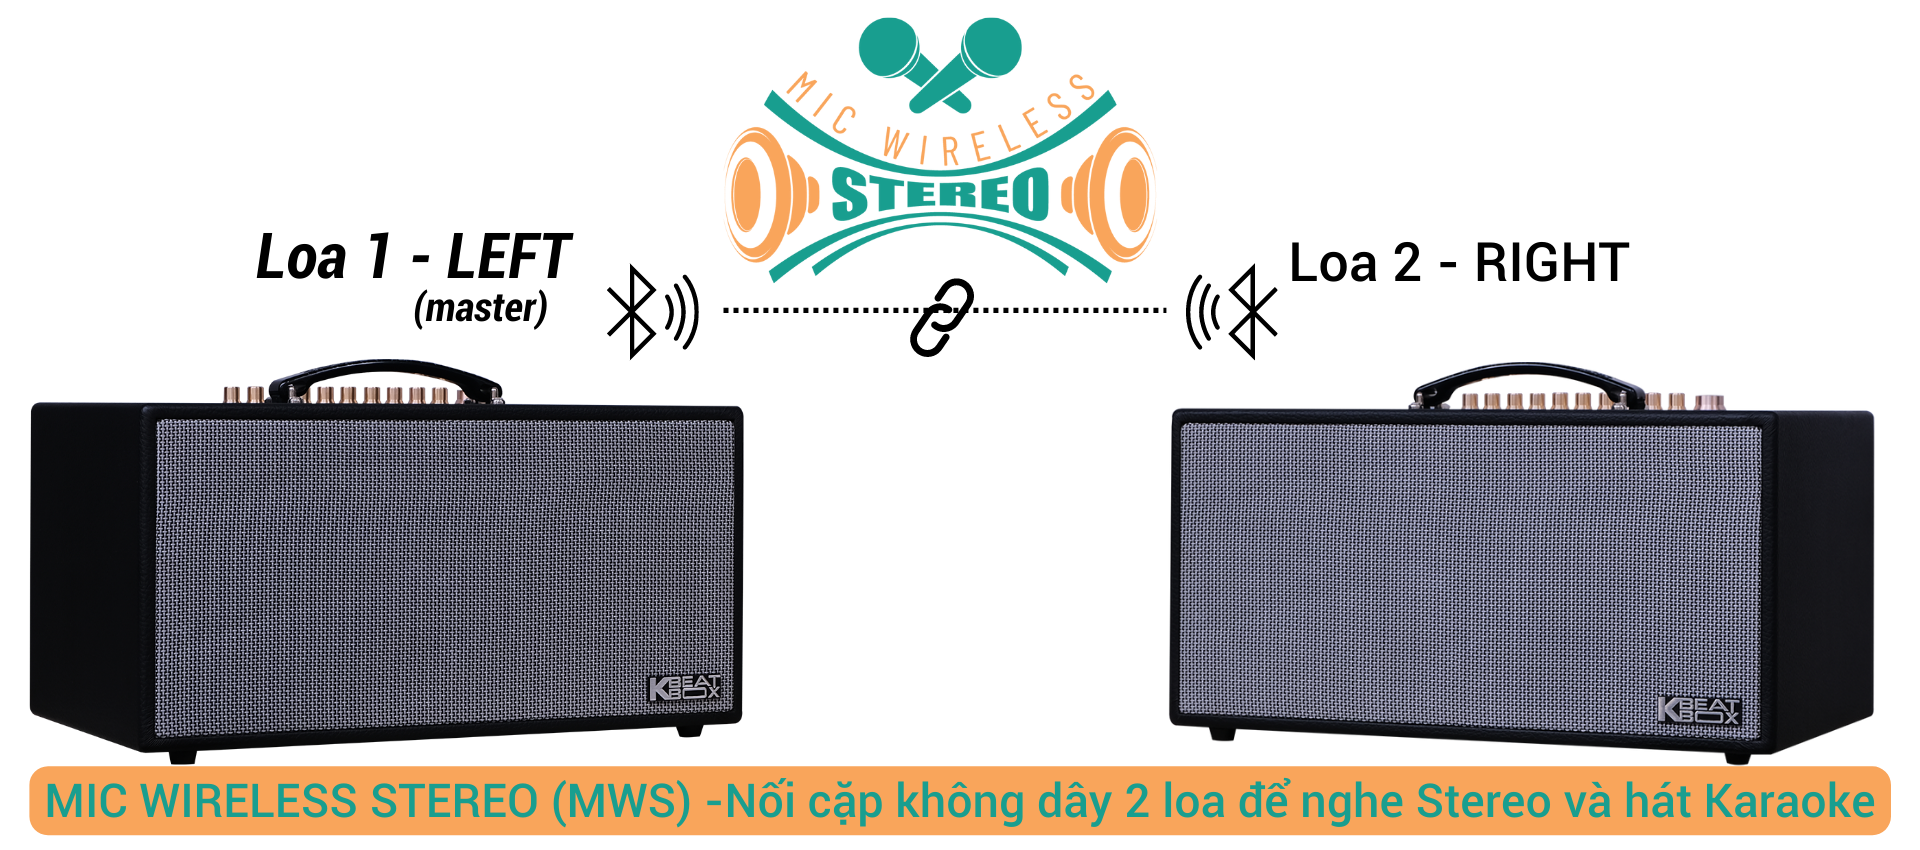 mic wireless stereo mws 23bccf56a8bb4d35ac70138c1e5fa286